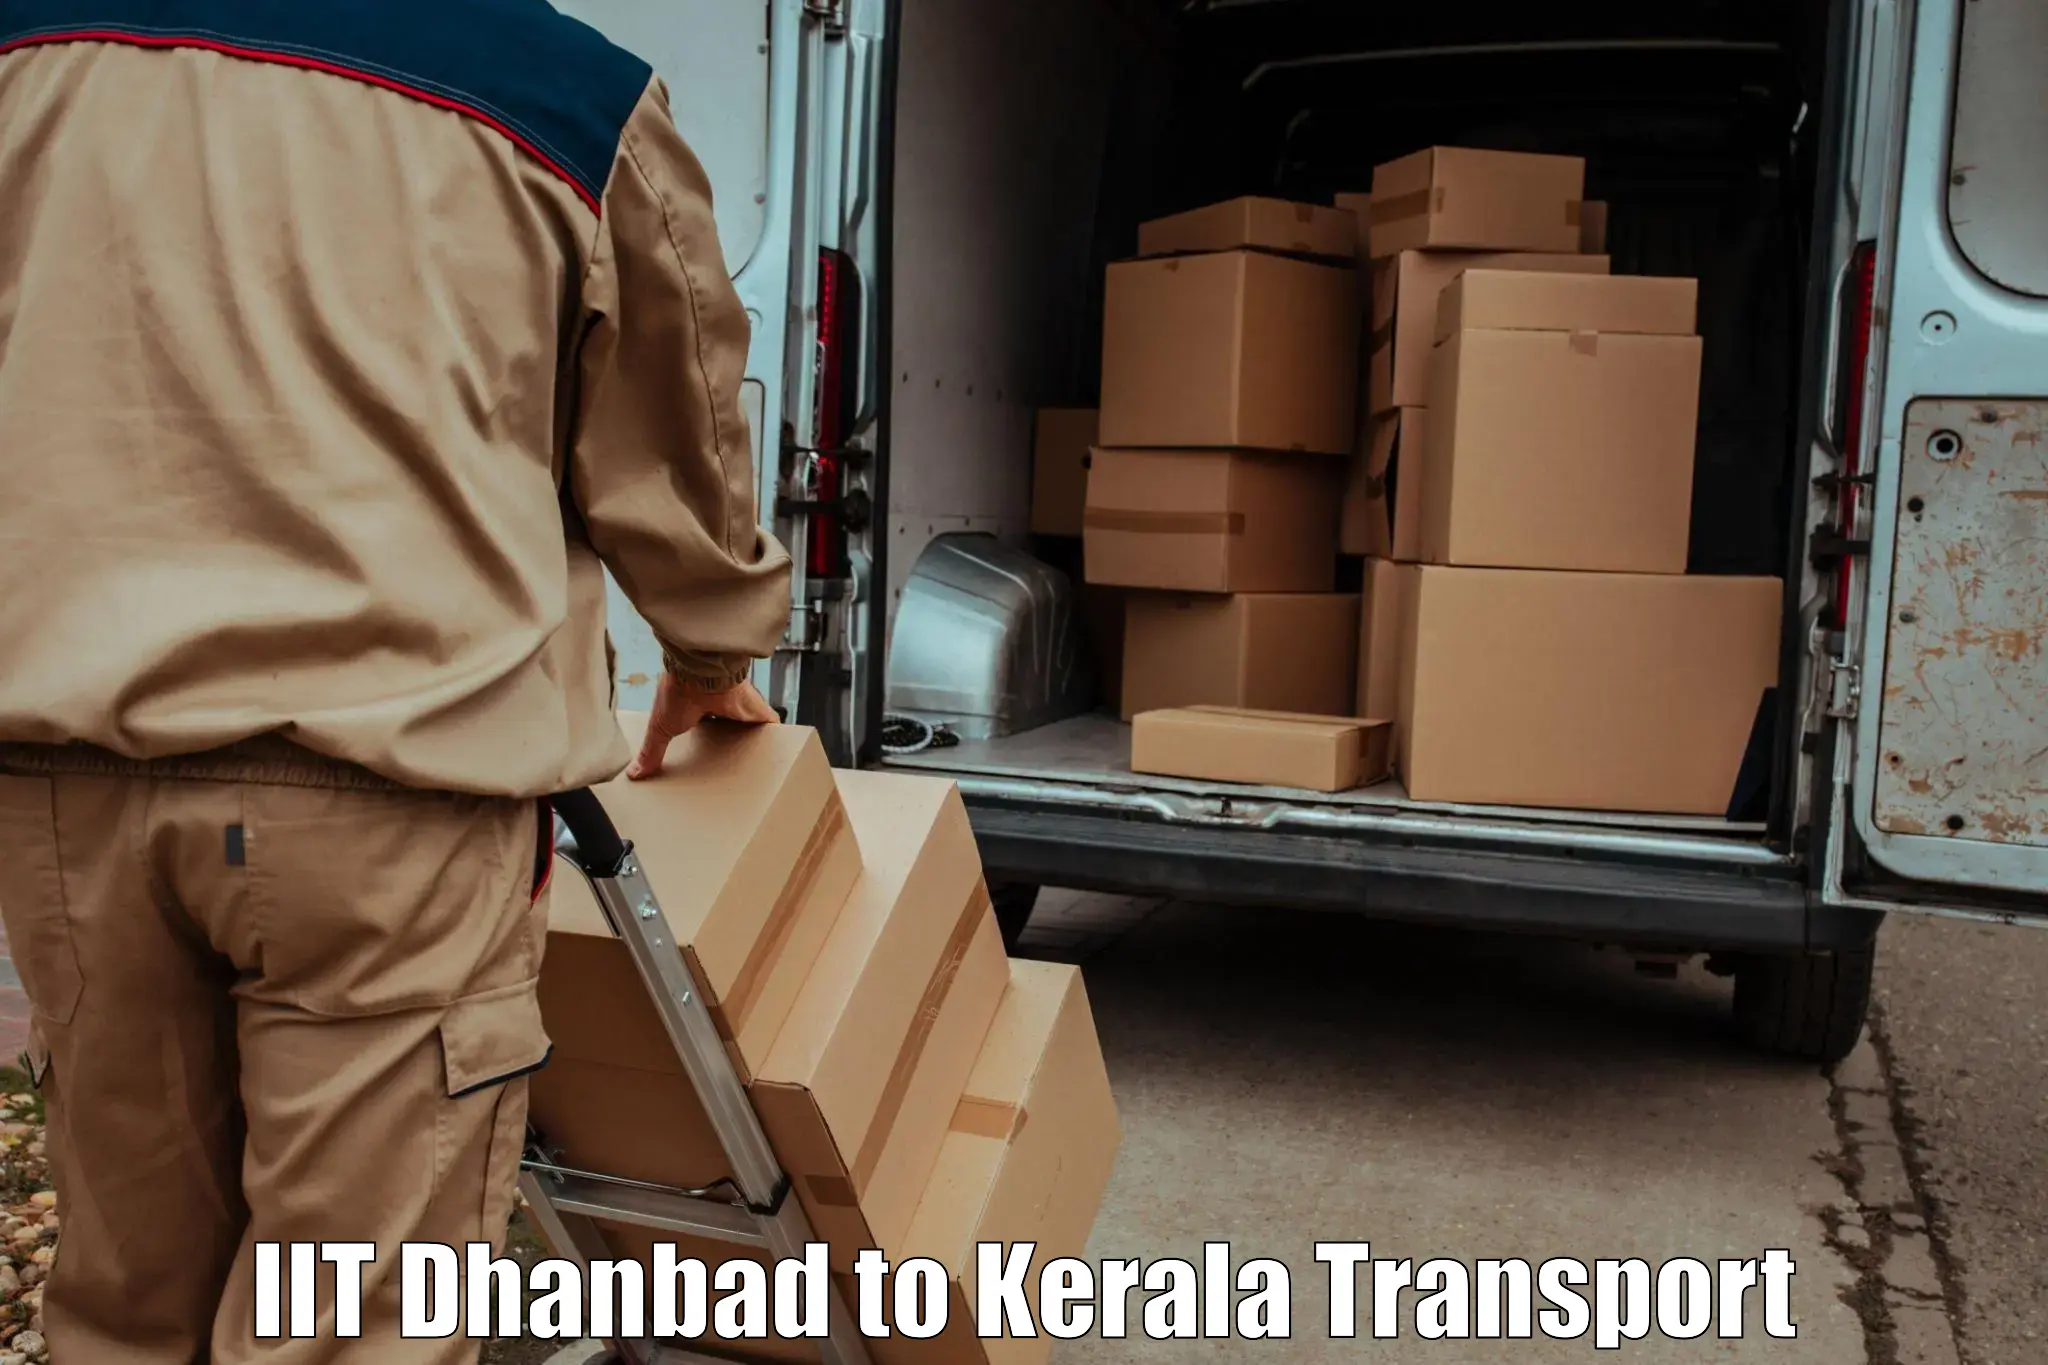 Furniture transport service IIT Dhanbad to Kottayam